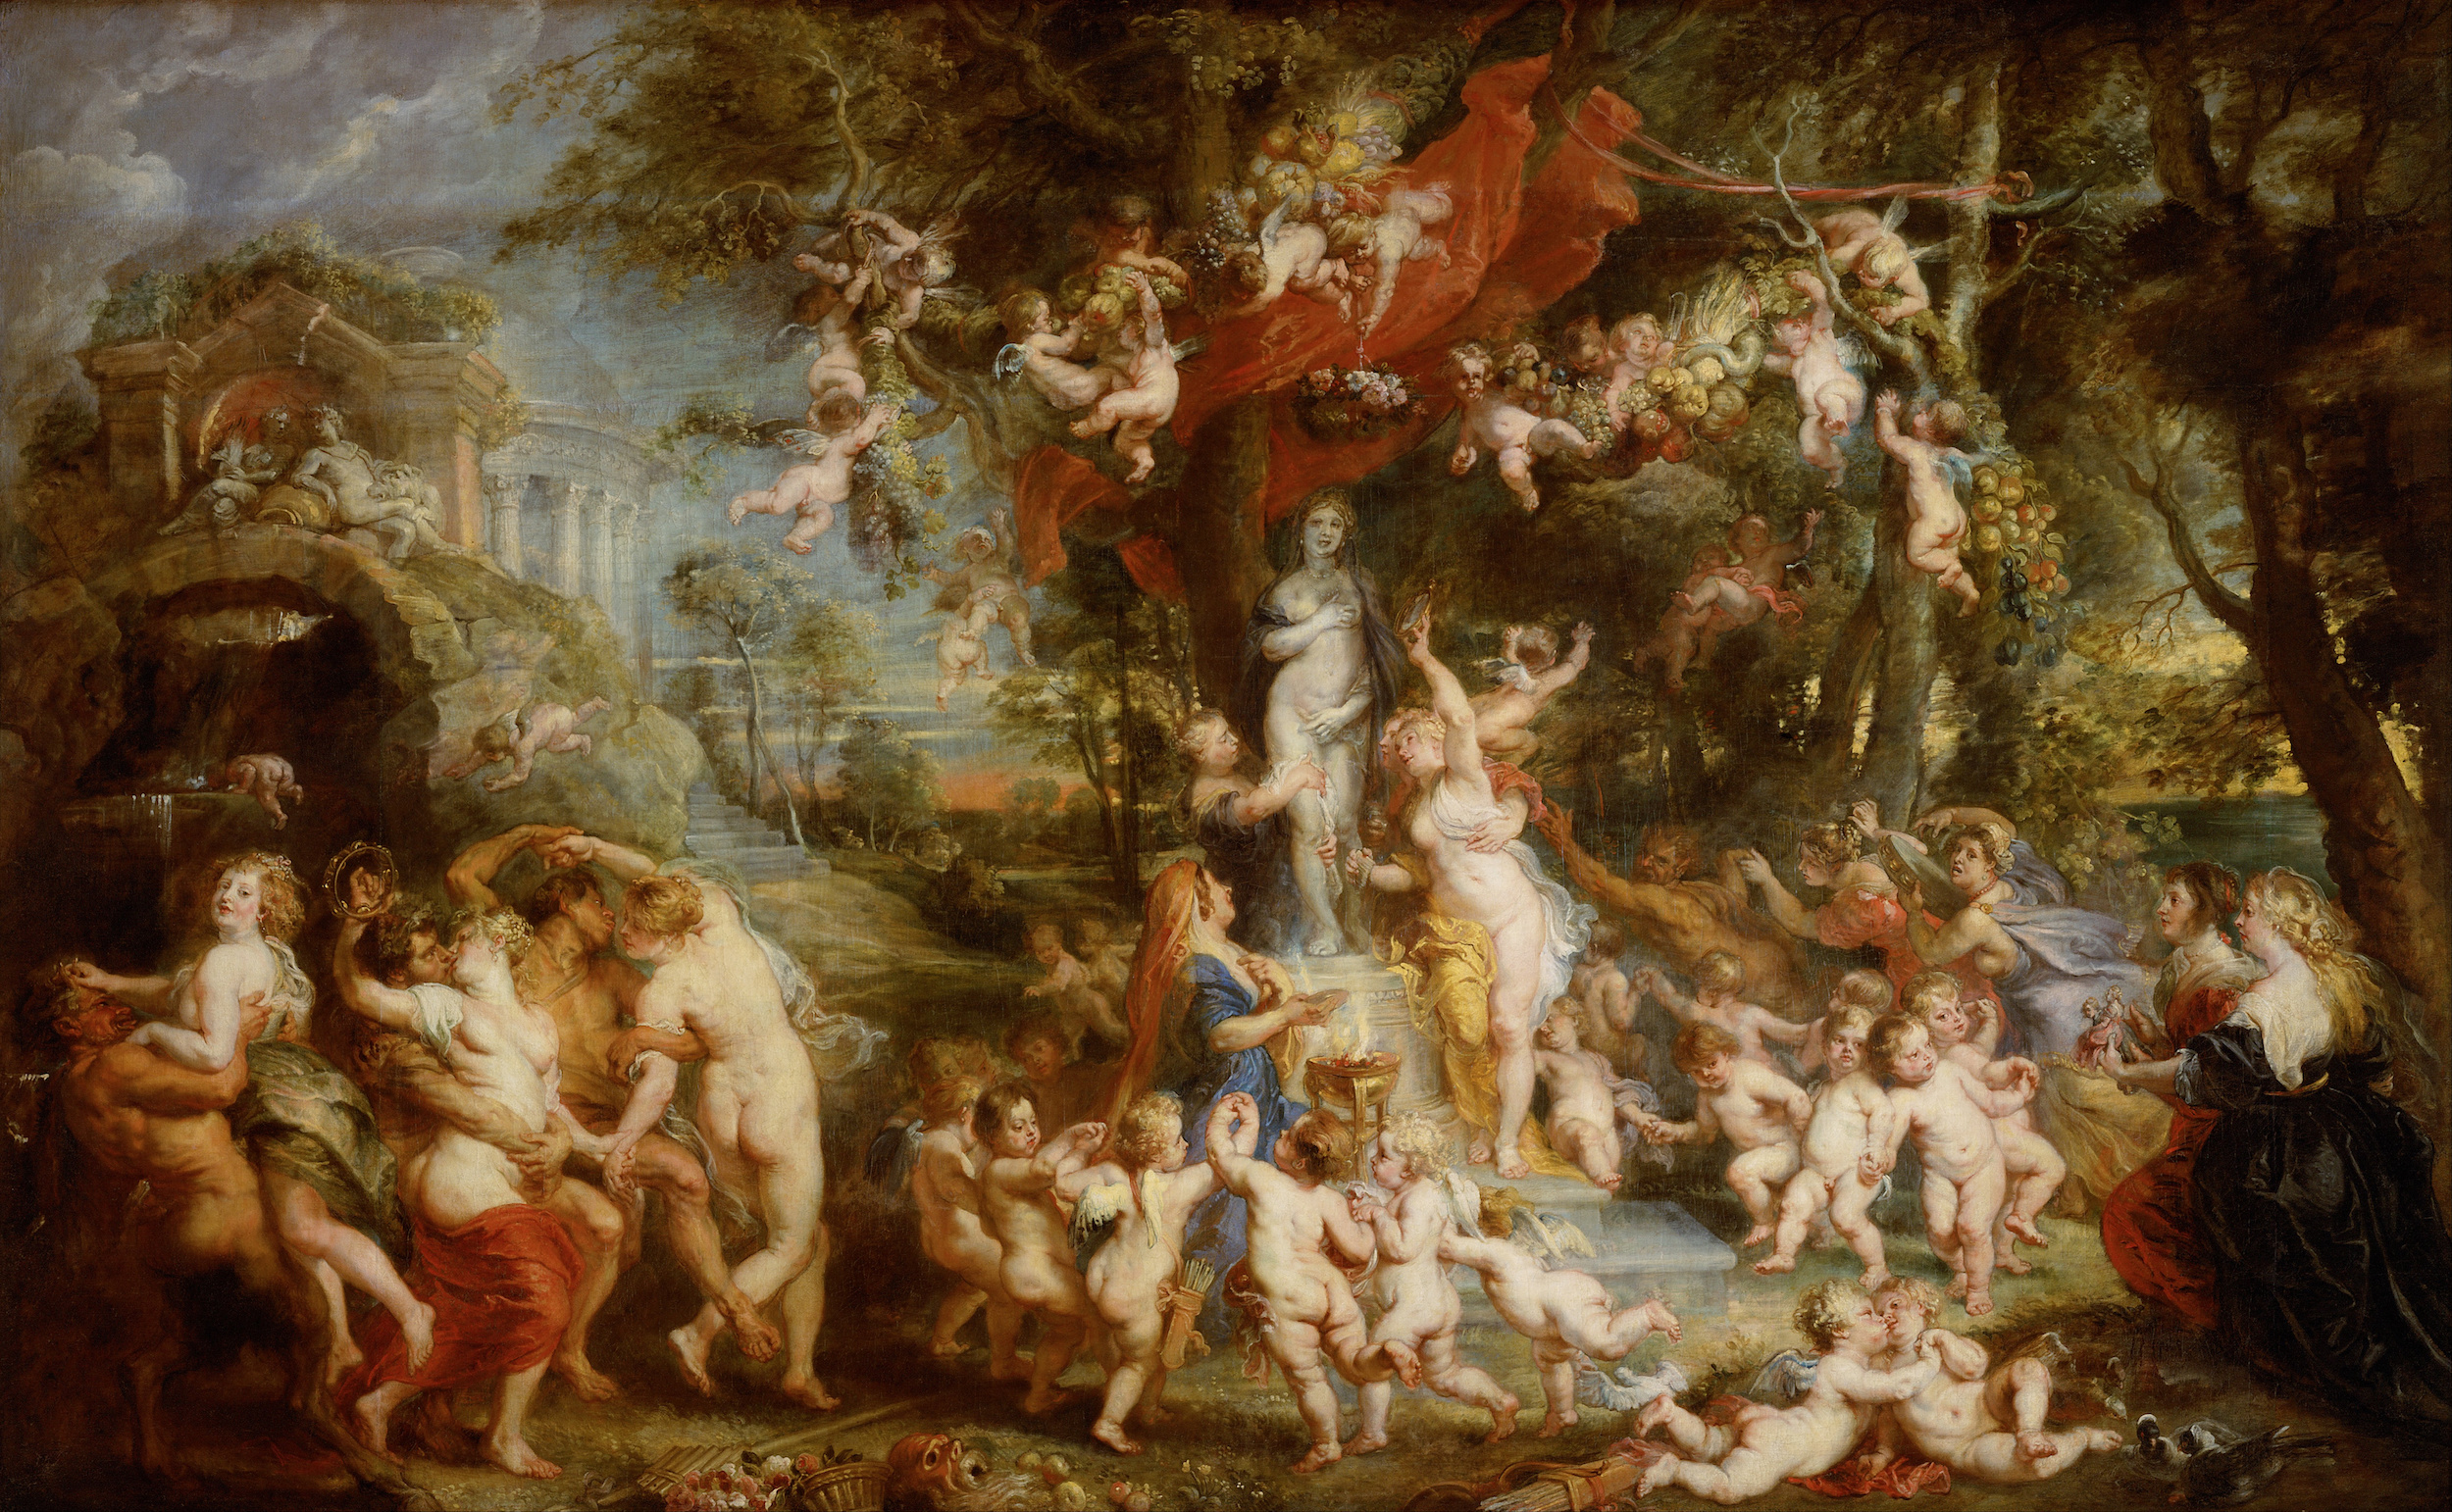 The Feast of Venus by Peter Paul Rubens - c. 1636/37 - 350 x 217 cm Kunsthistorisches Museum